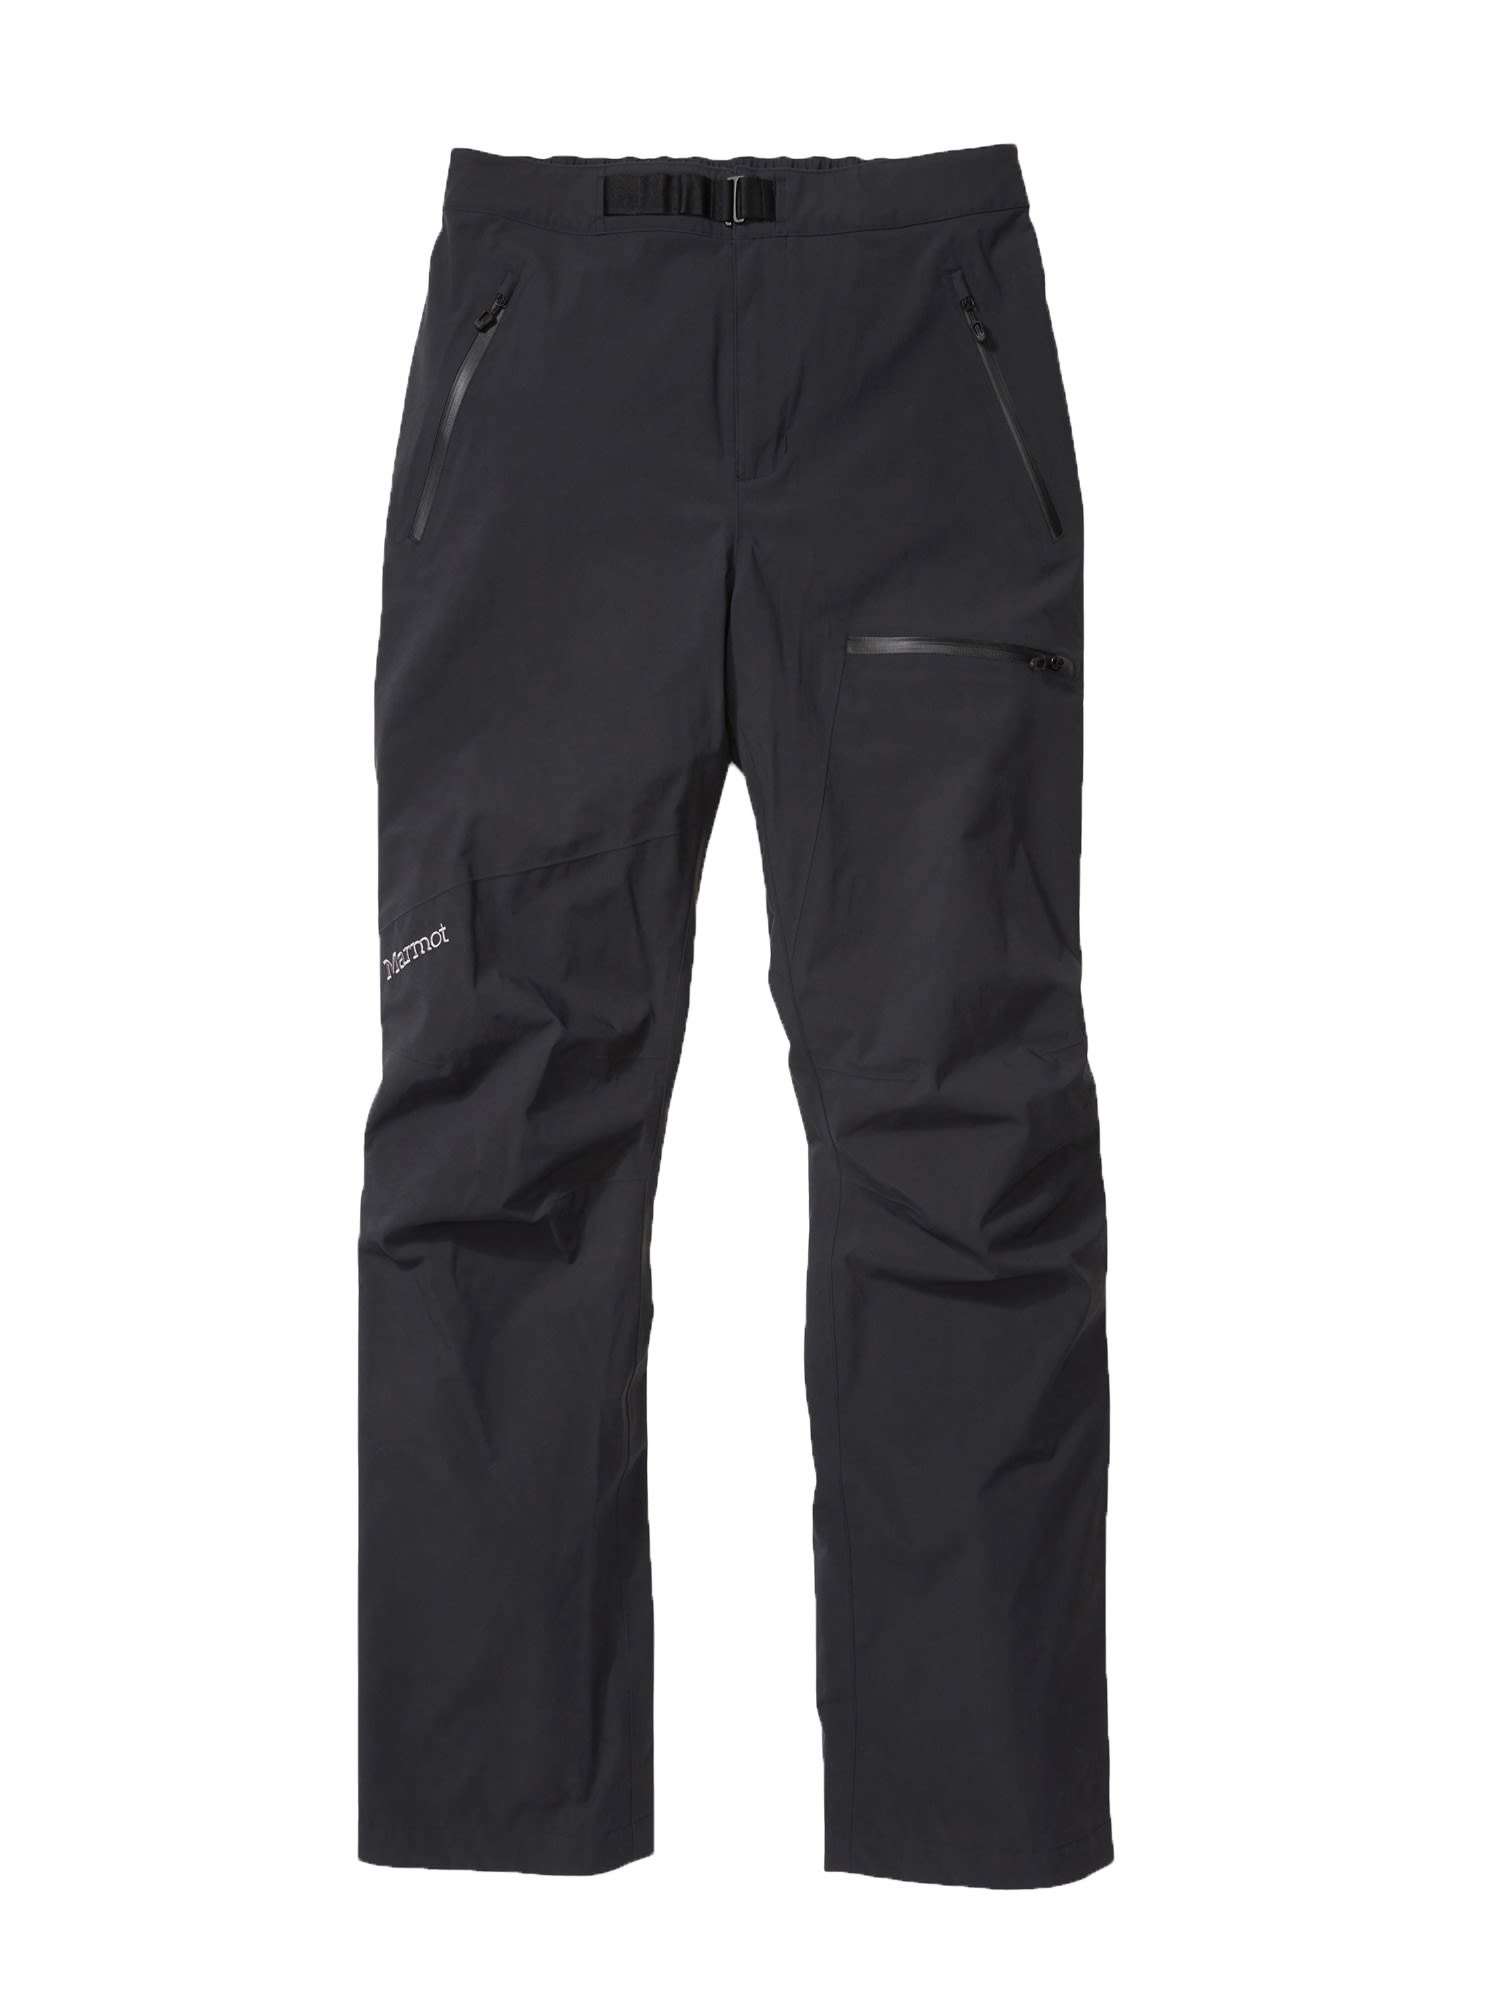 Marmot Evodry Torreys Pant Schwarz- Male Jogginghosen- Grsse S - Farbe Black unter Marmot